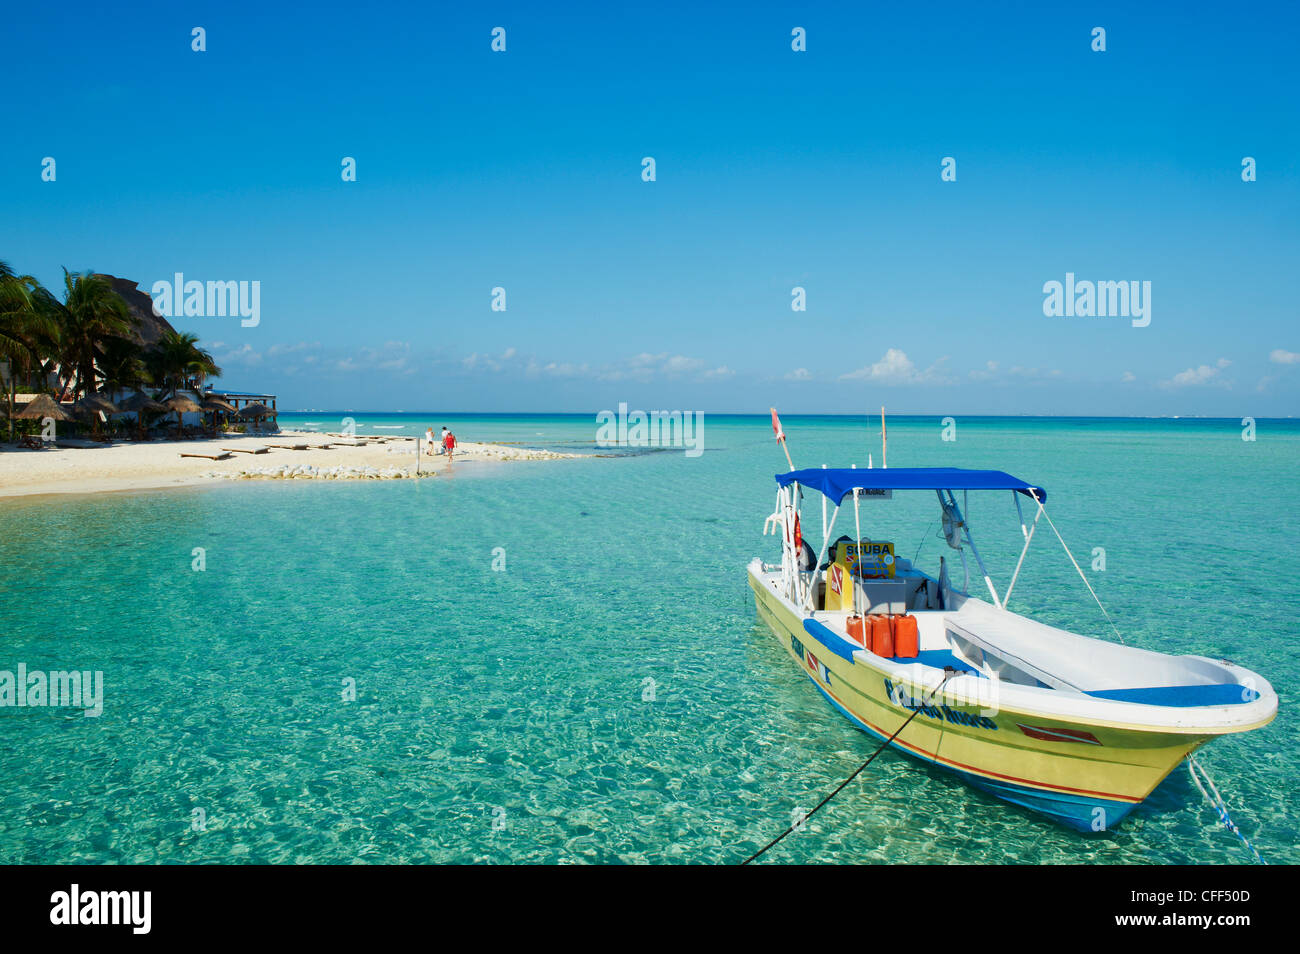 Playa Norte beach, Isla Mujeres Island, Riviera Maya, Quintana Roo state, Mexico, Stock Photo